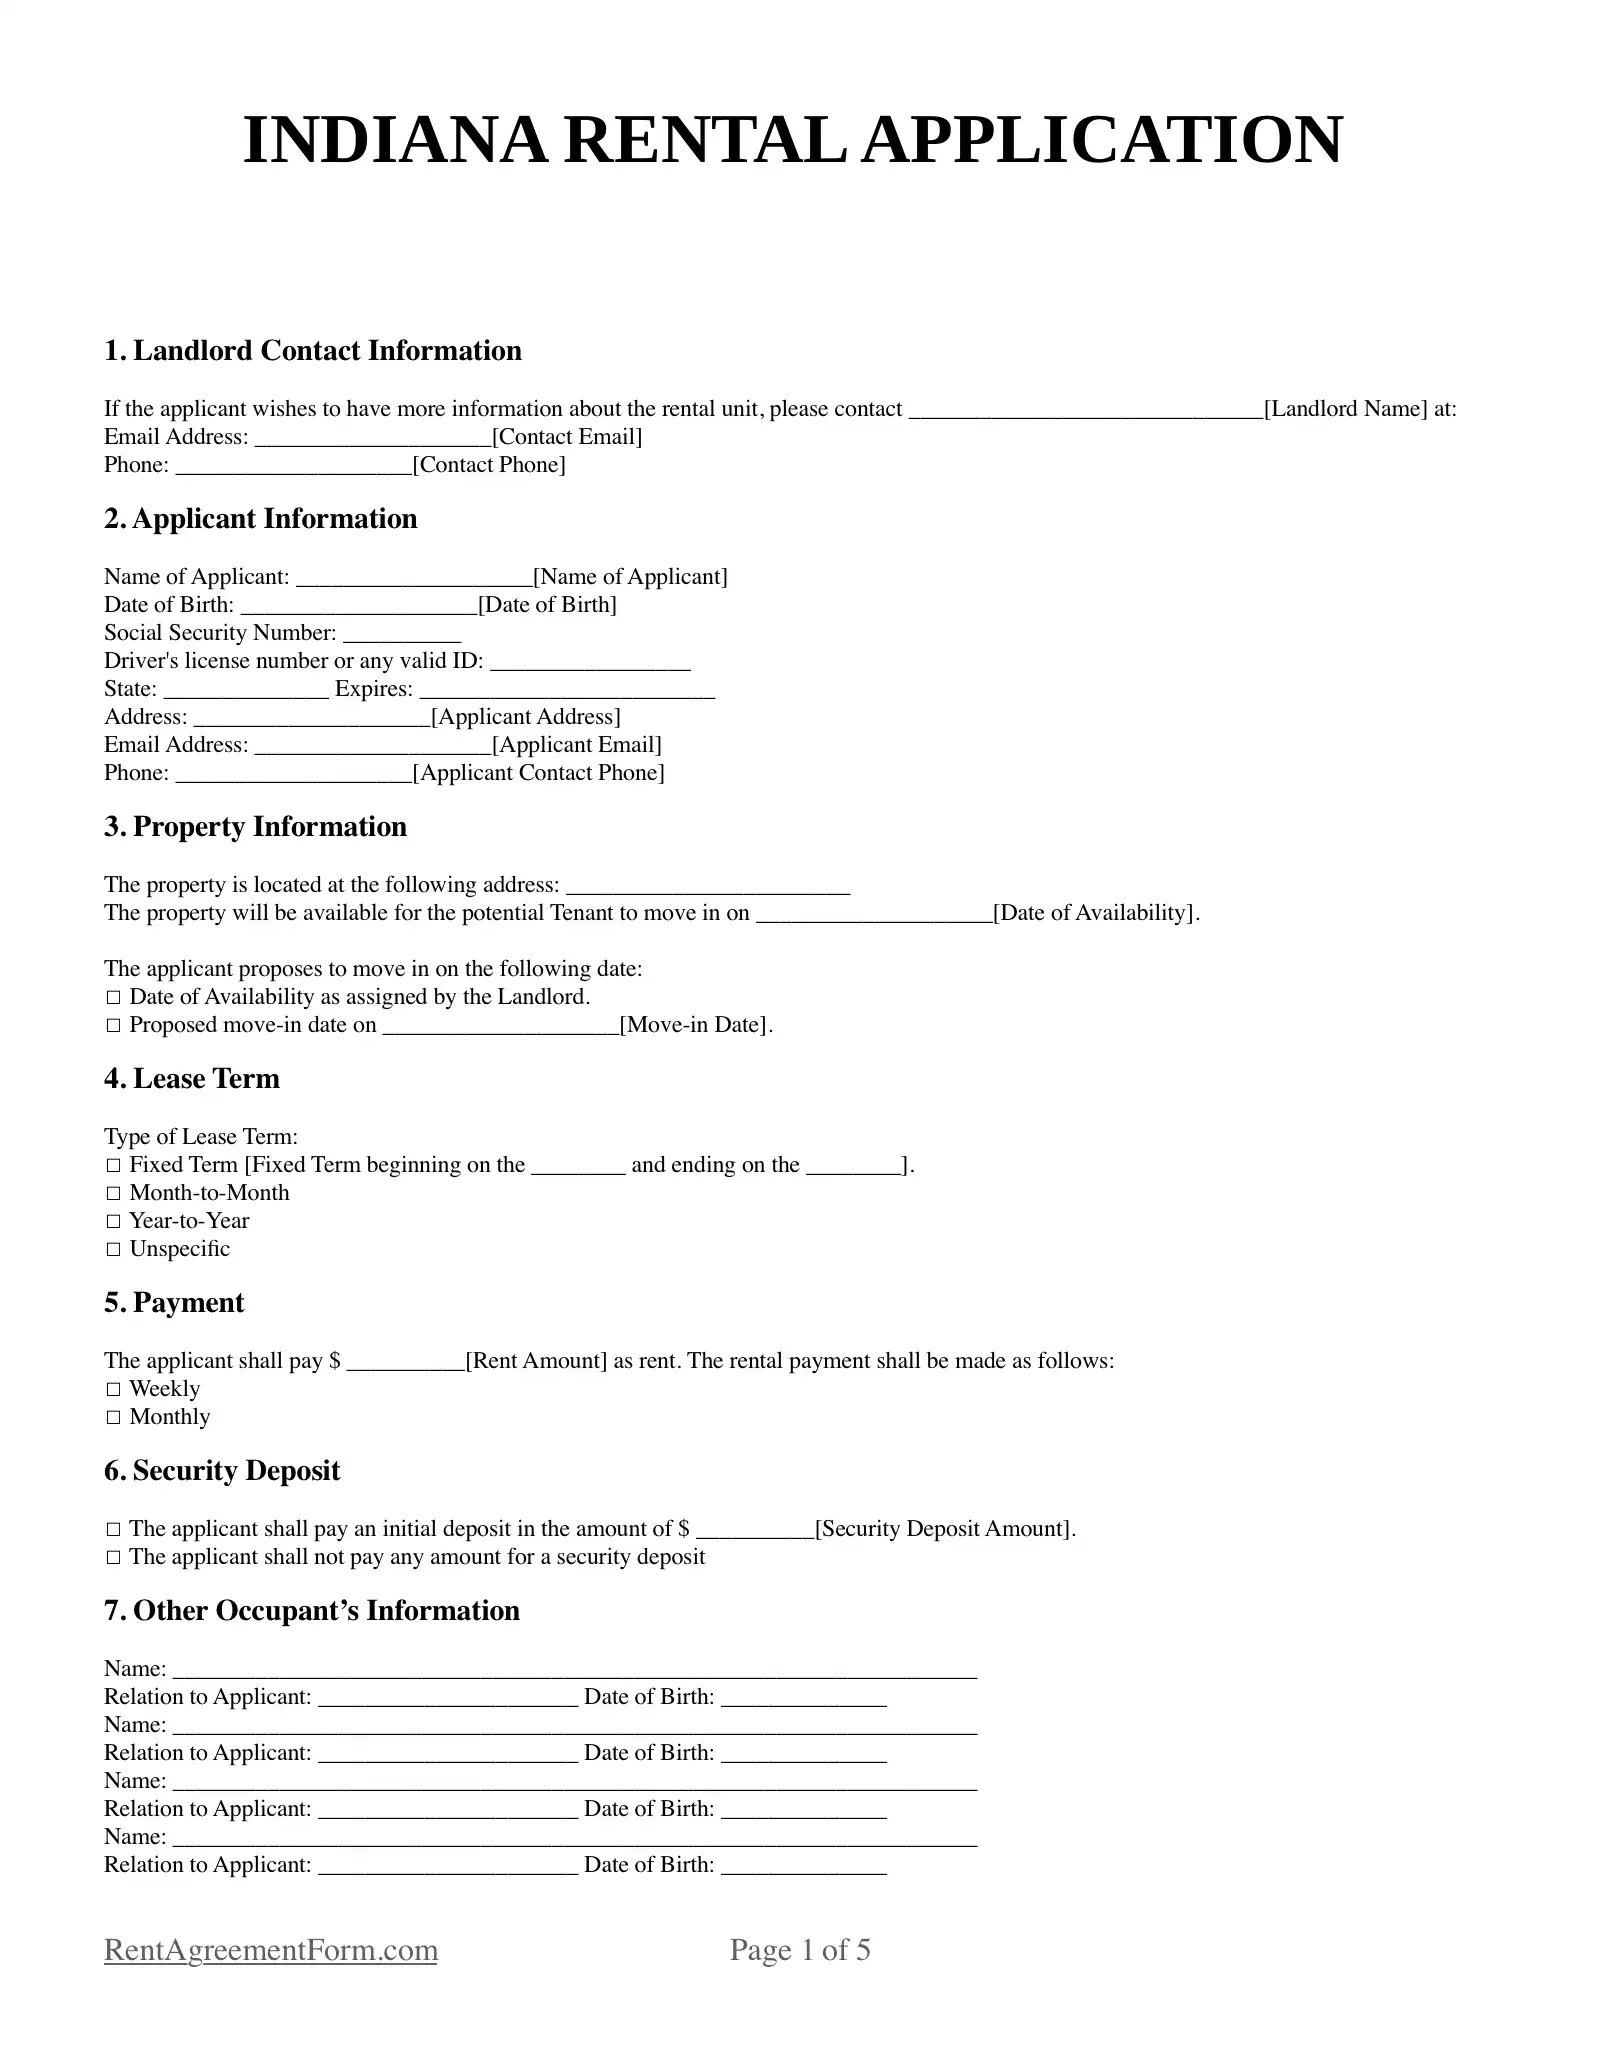 Indiana Rental Application Sample